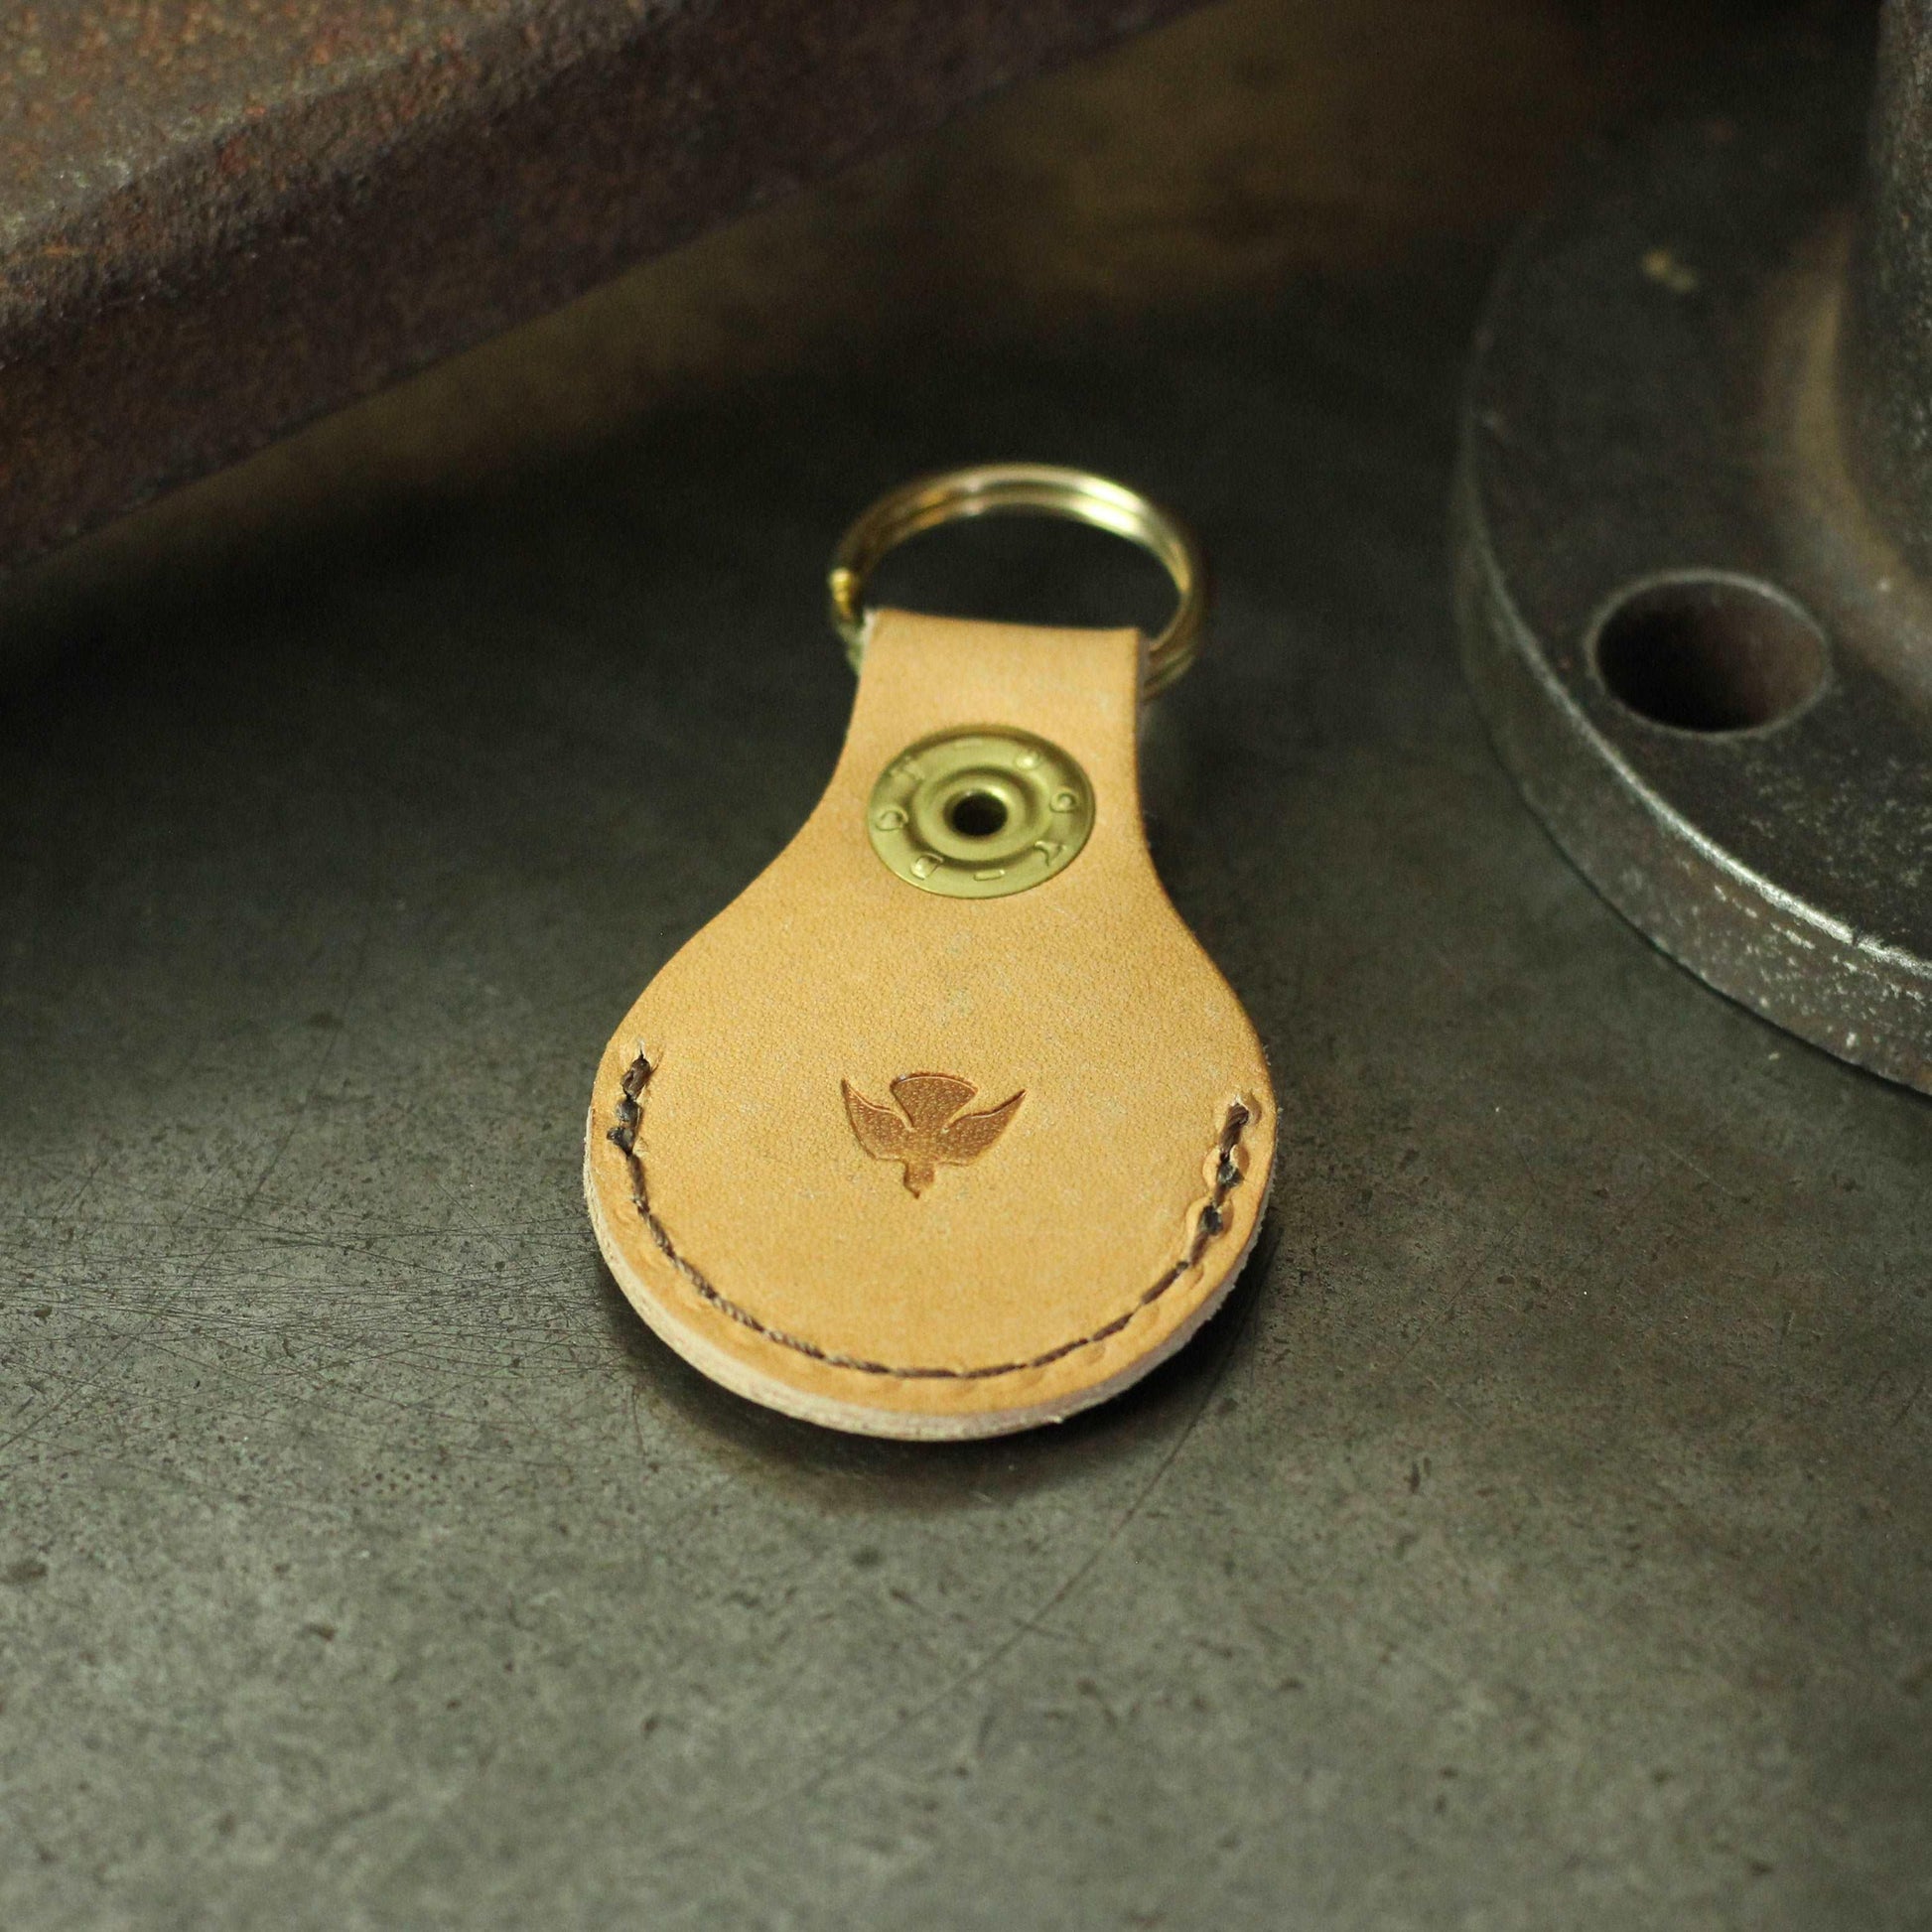 an ashley clarke brown leather apple airtag case key holder